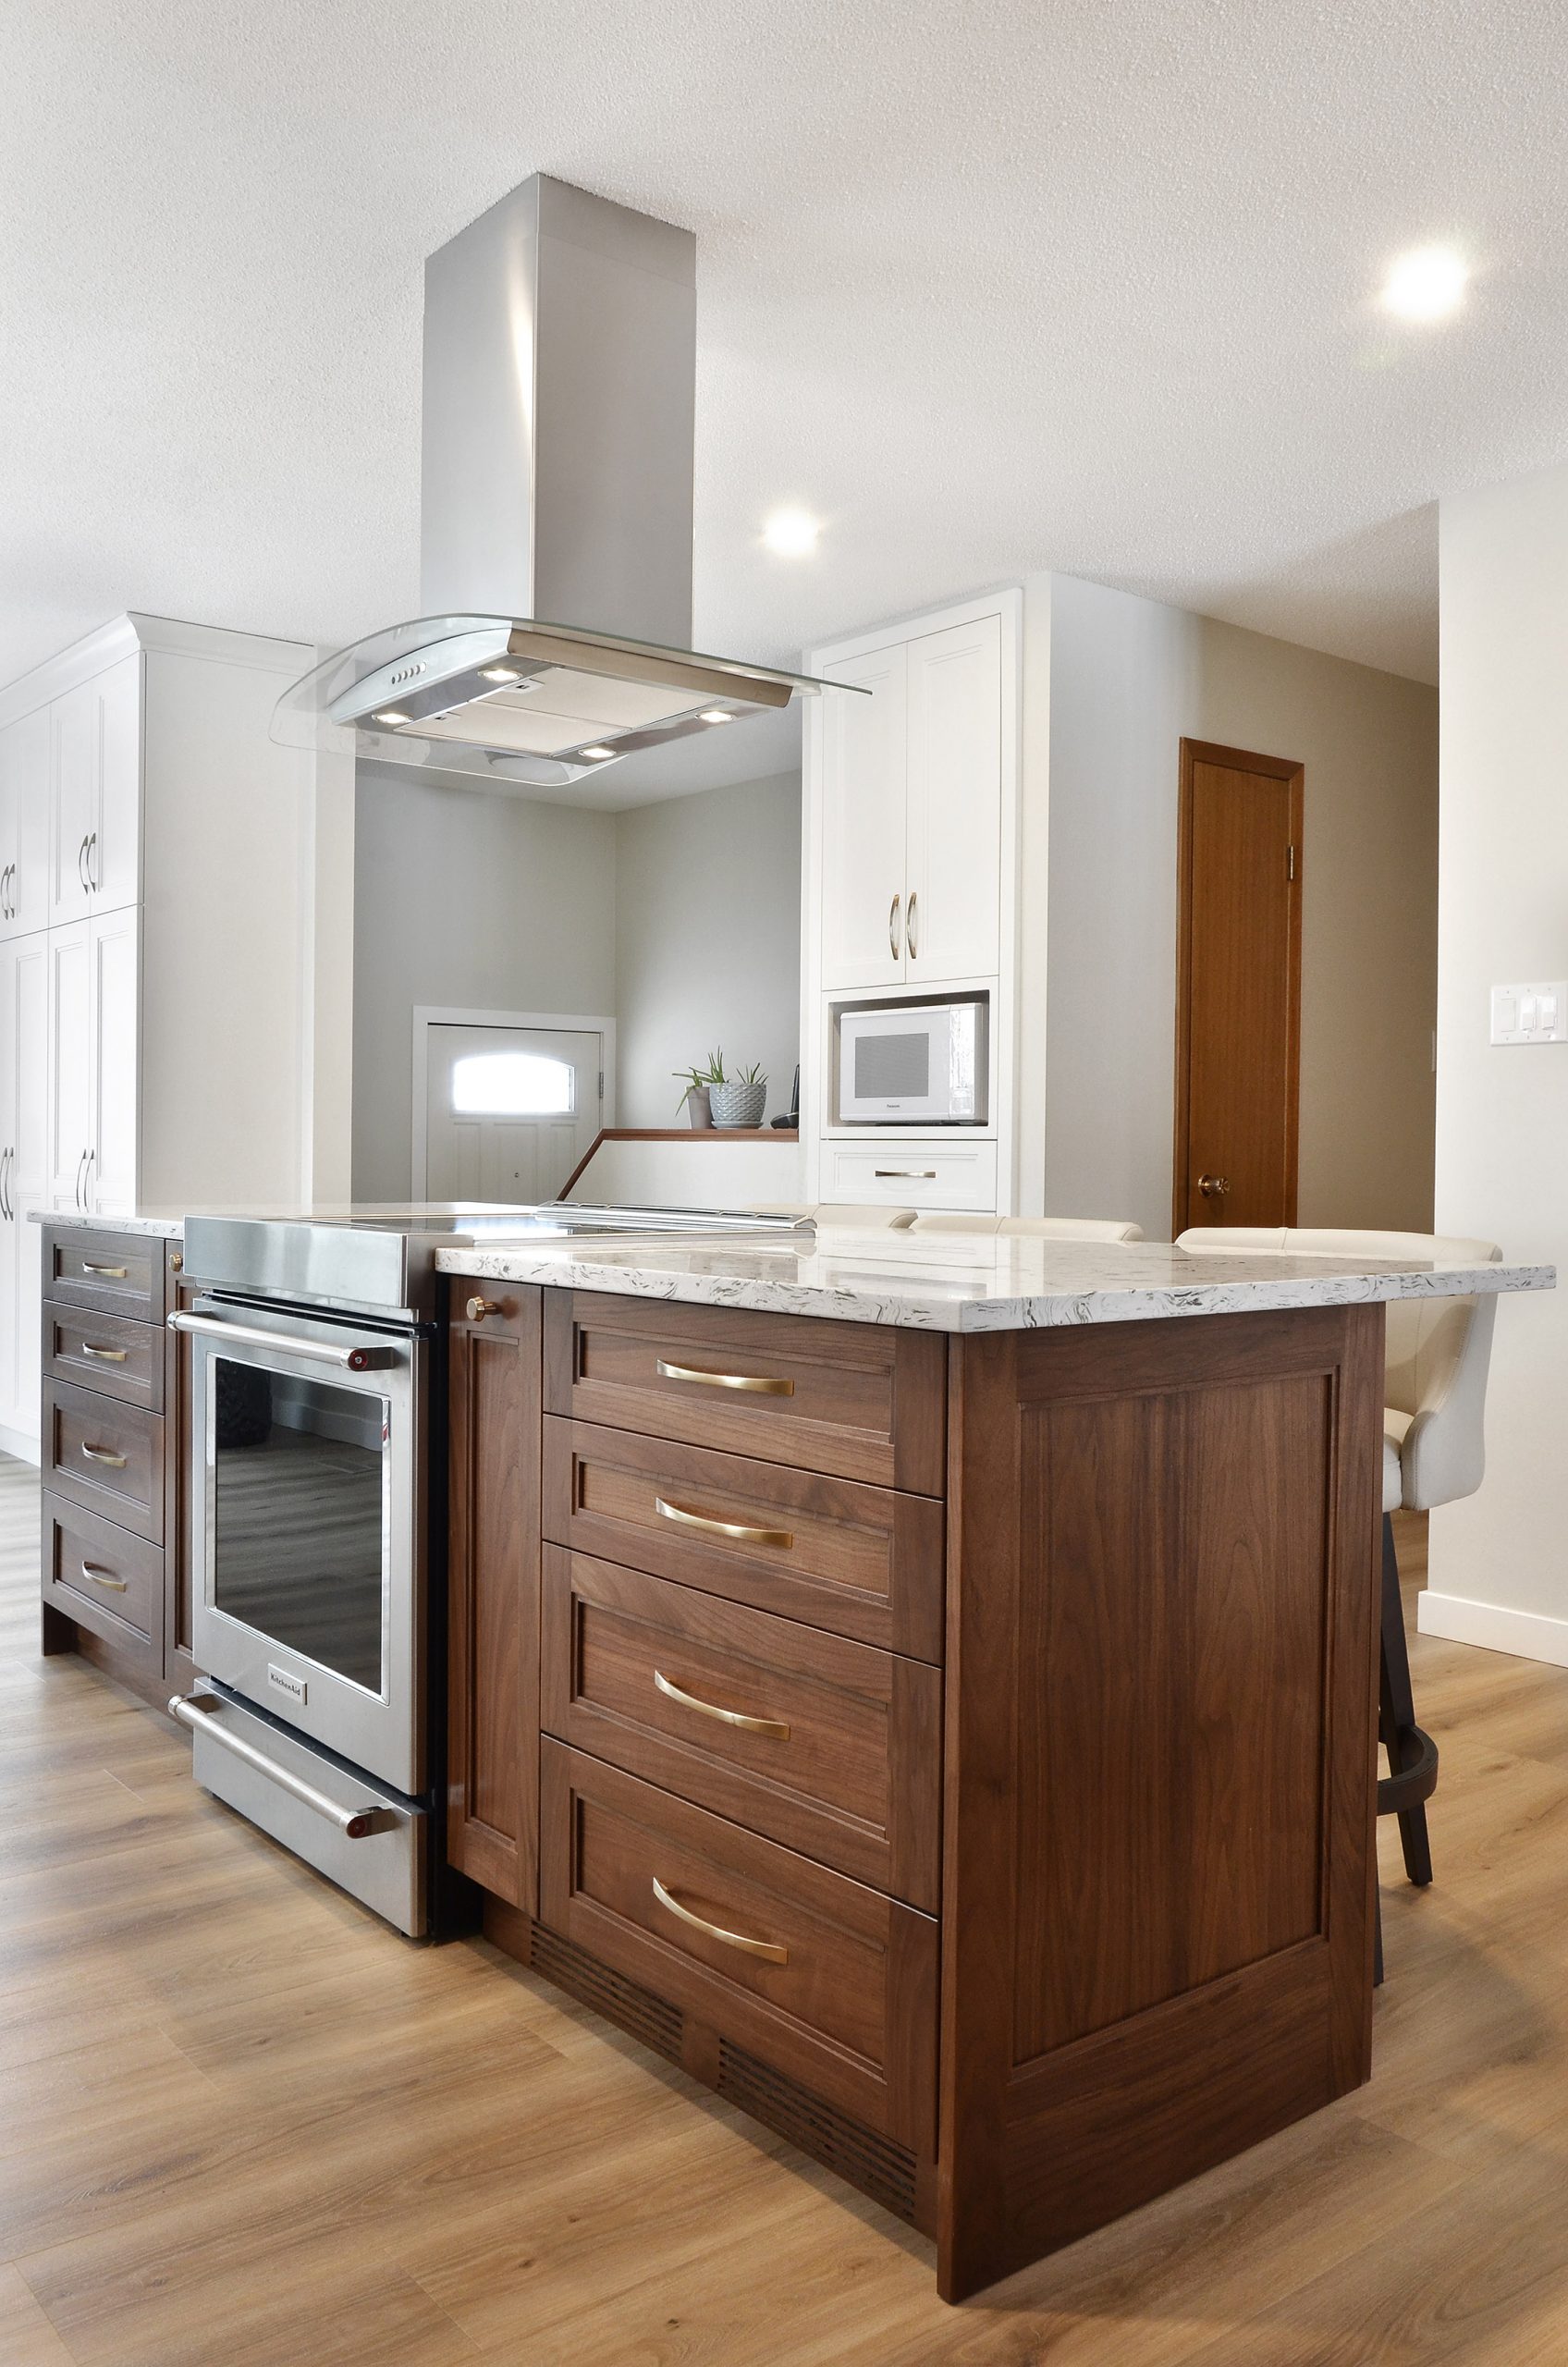 Winnipeg renovations modern kitchen sleek white cabinets white marble countertop wood drawers over range vent